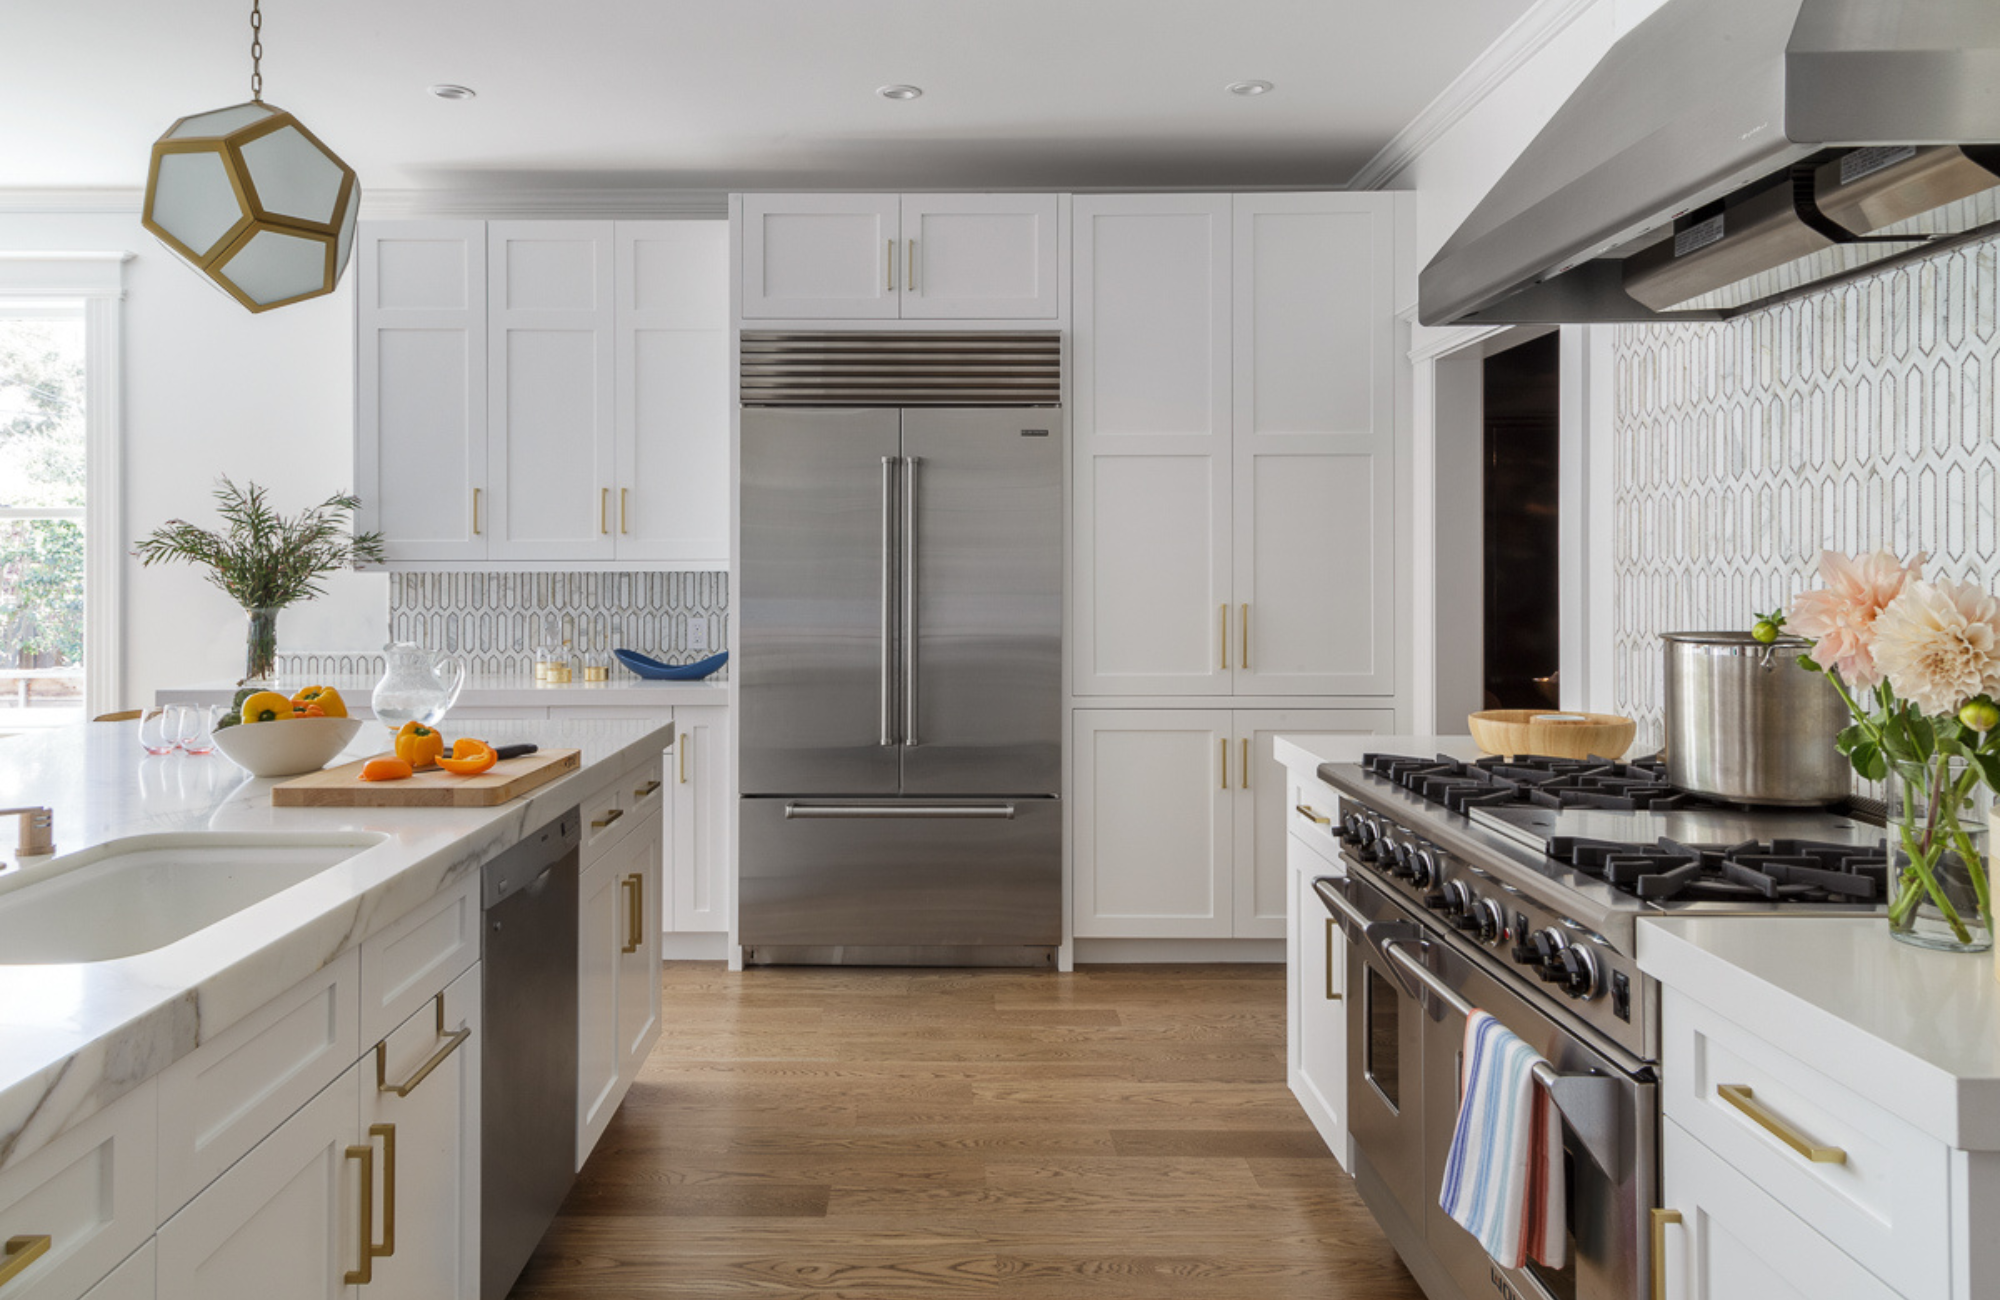 coddington-design-bay-area-ca-selecting-quality-appliances-modern-kitchen-brass-accents-marble-counterrops